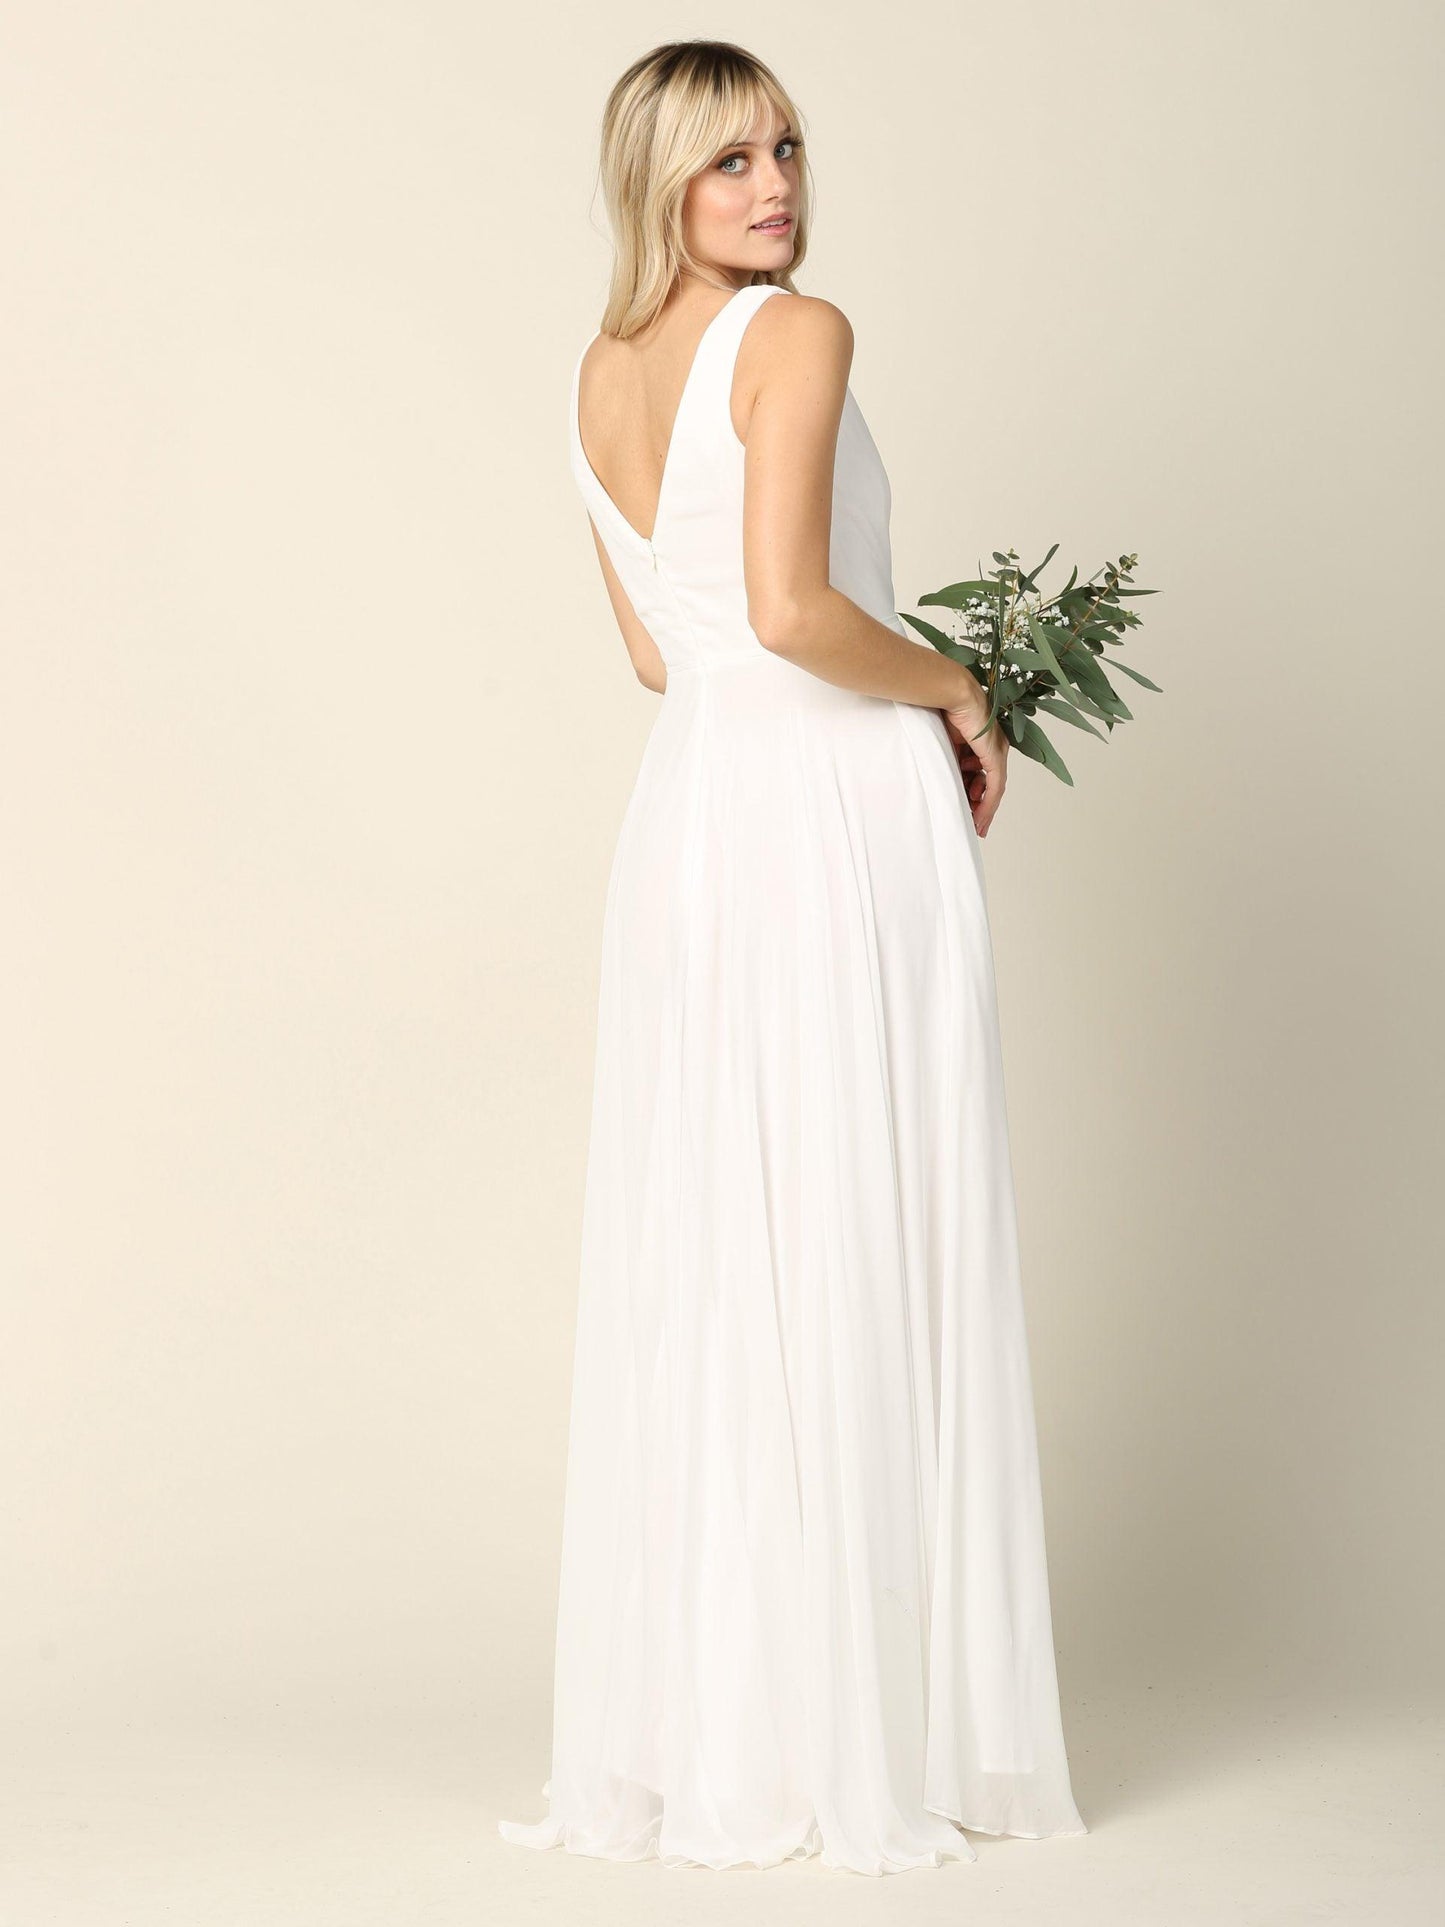 Long Formal Sleeveless Cowl Neck Dress Bridesmaids - The Dress Outlet